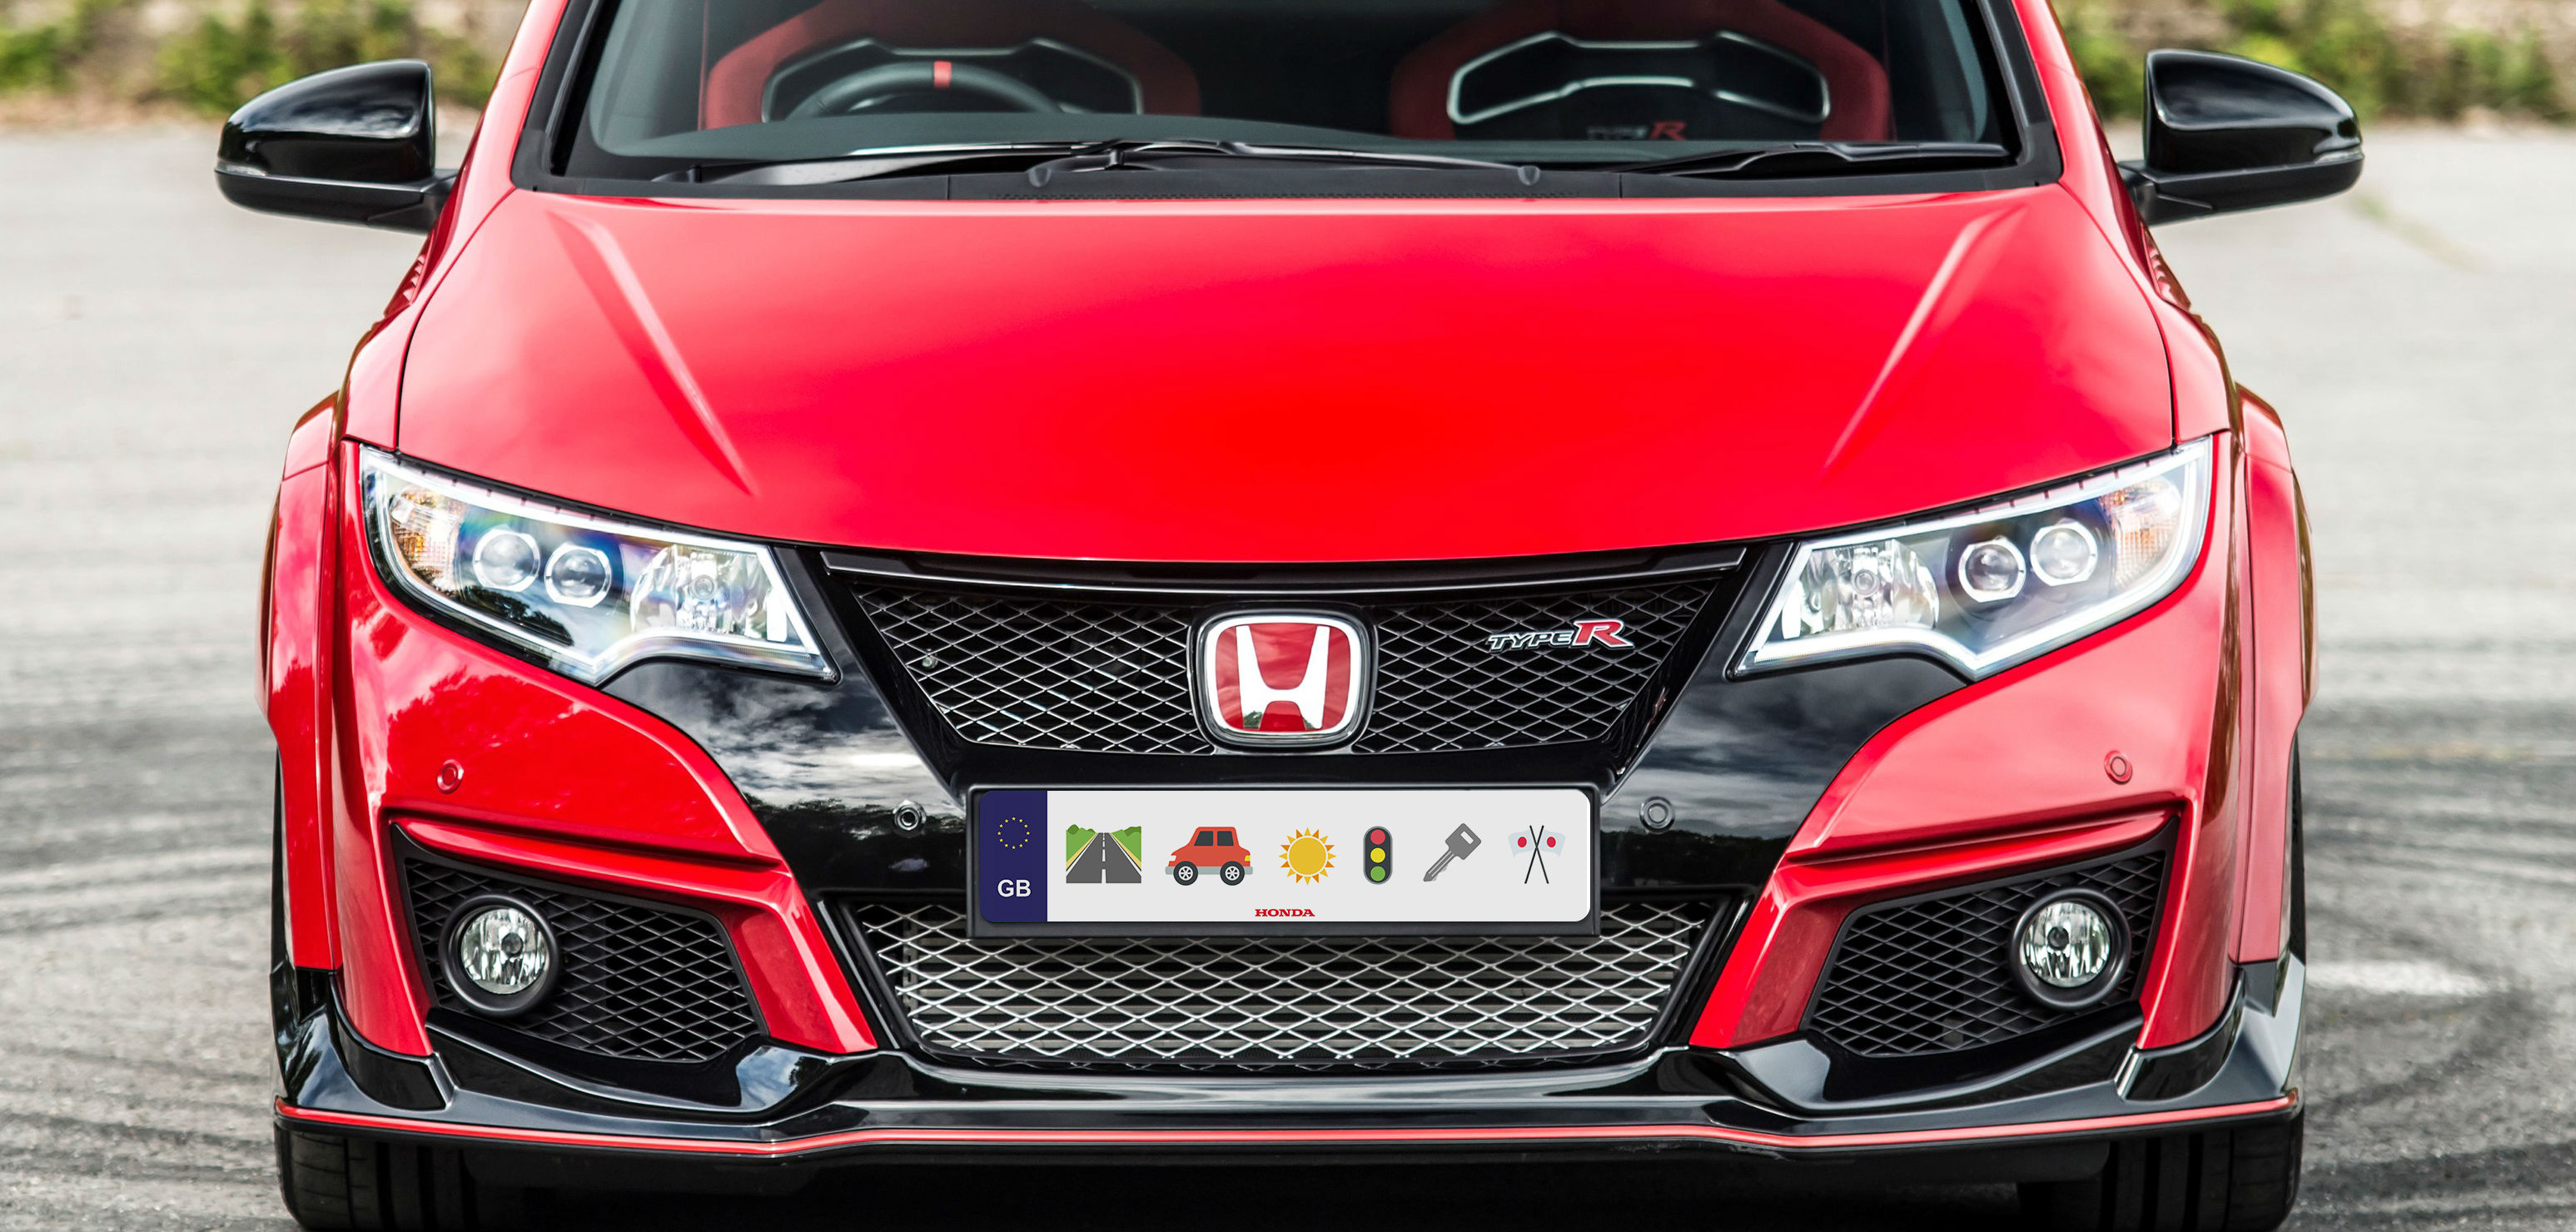 Honda's emoji number plates: Best April Fools jokes by car companies